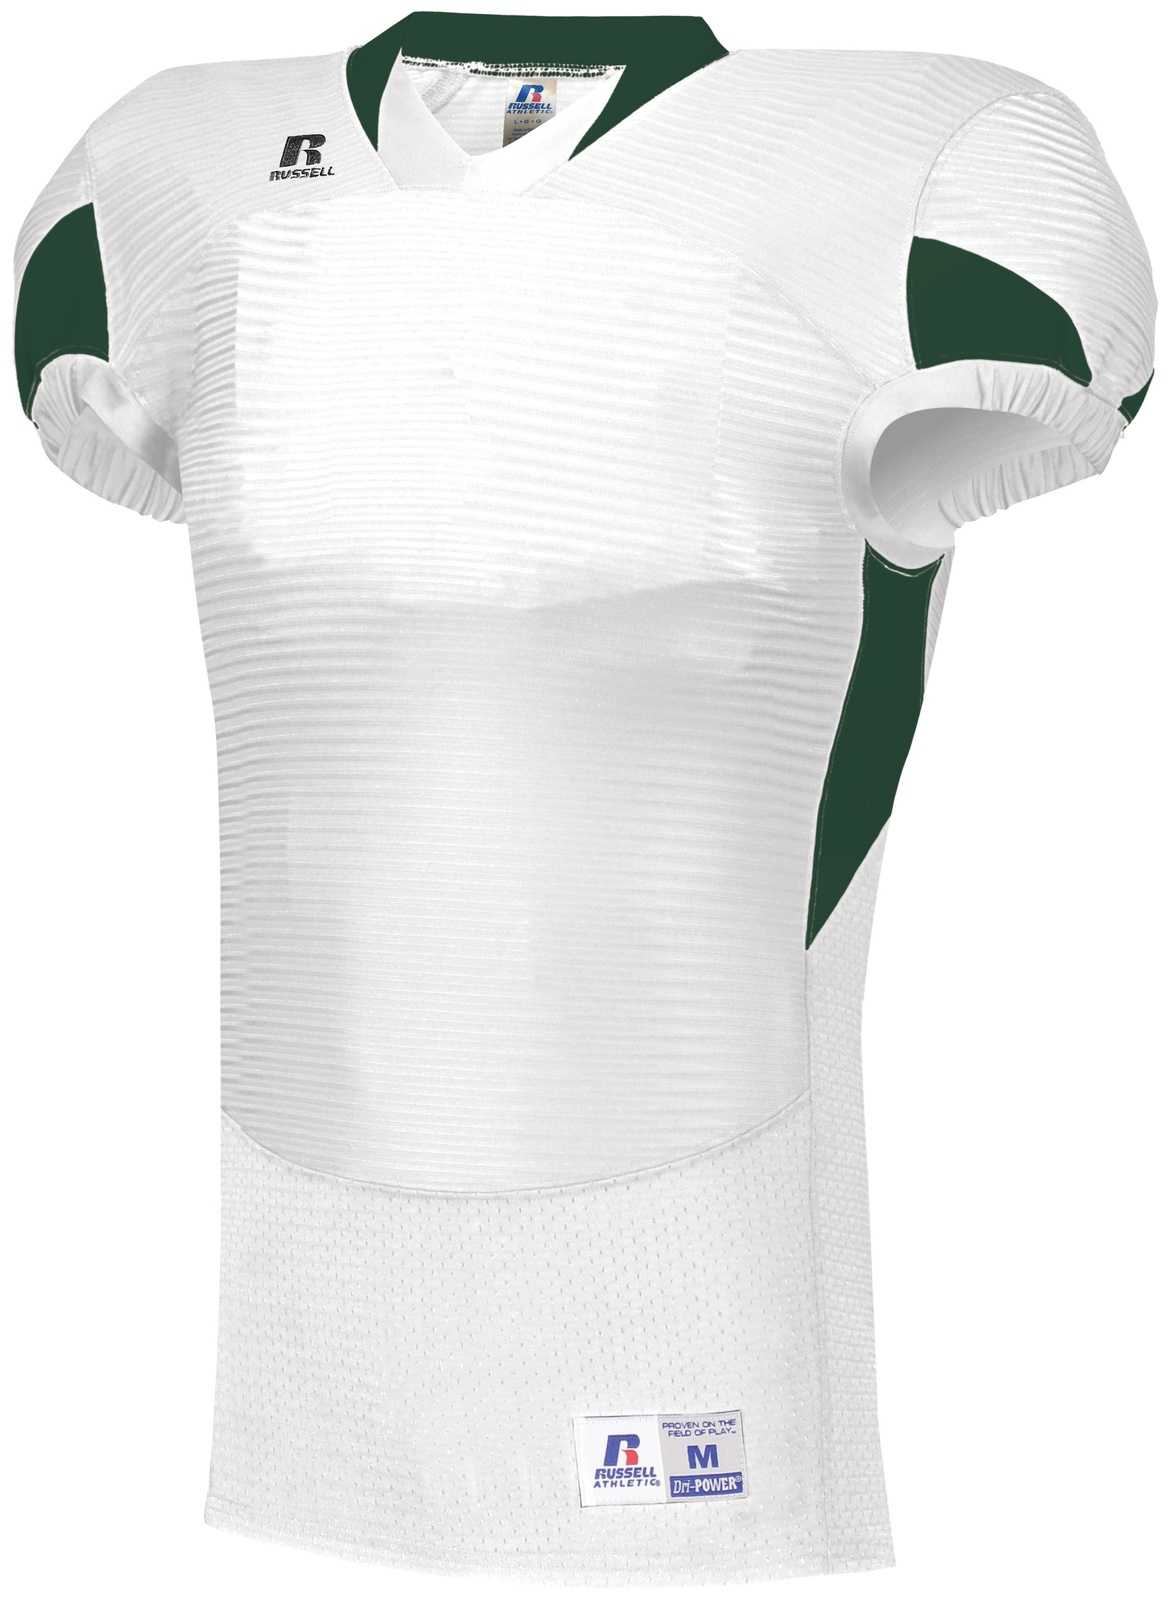 Russell S81XCM Waist Length Football Jersey - White Dark Green - HIT a Double